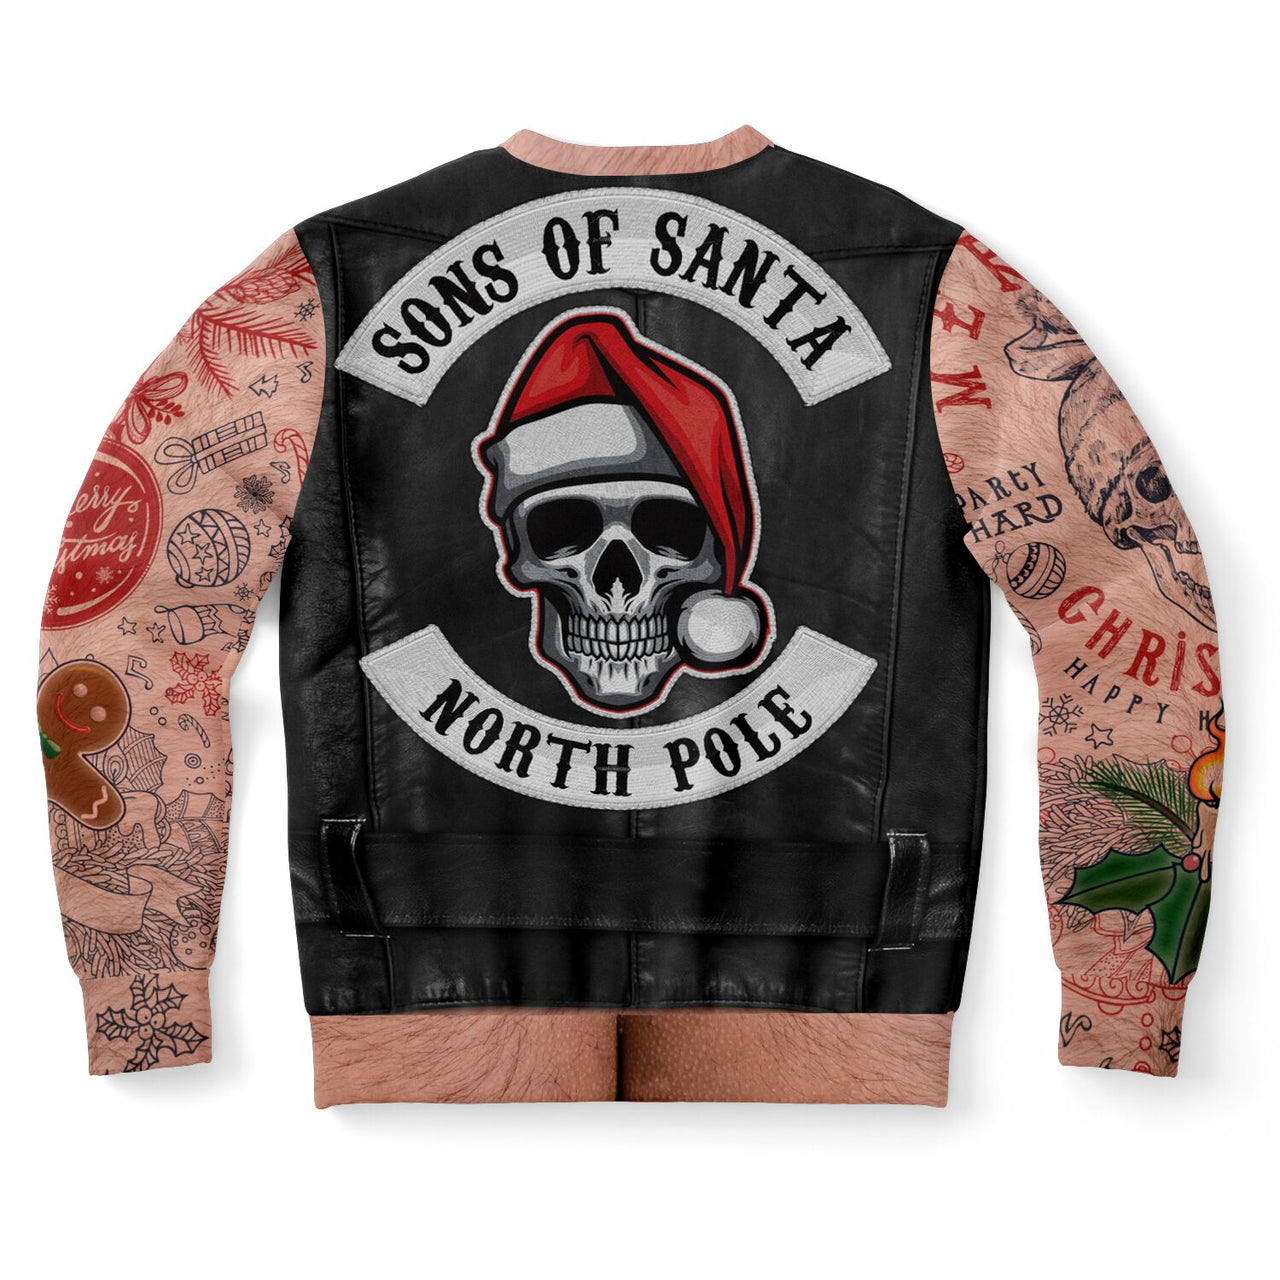 Sons of Santa Ugly Christmas Fashion Sweatshirt - Adult